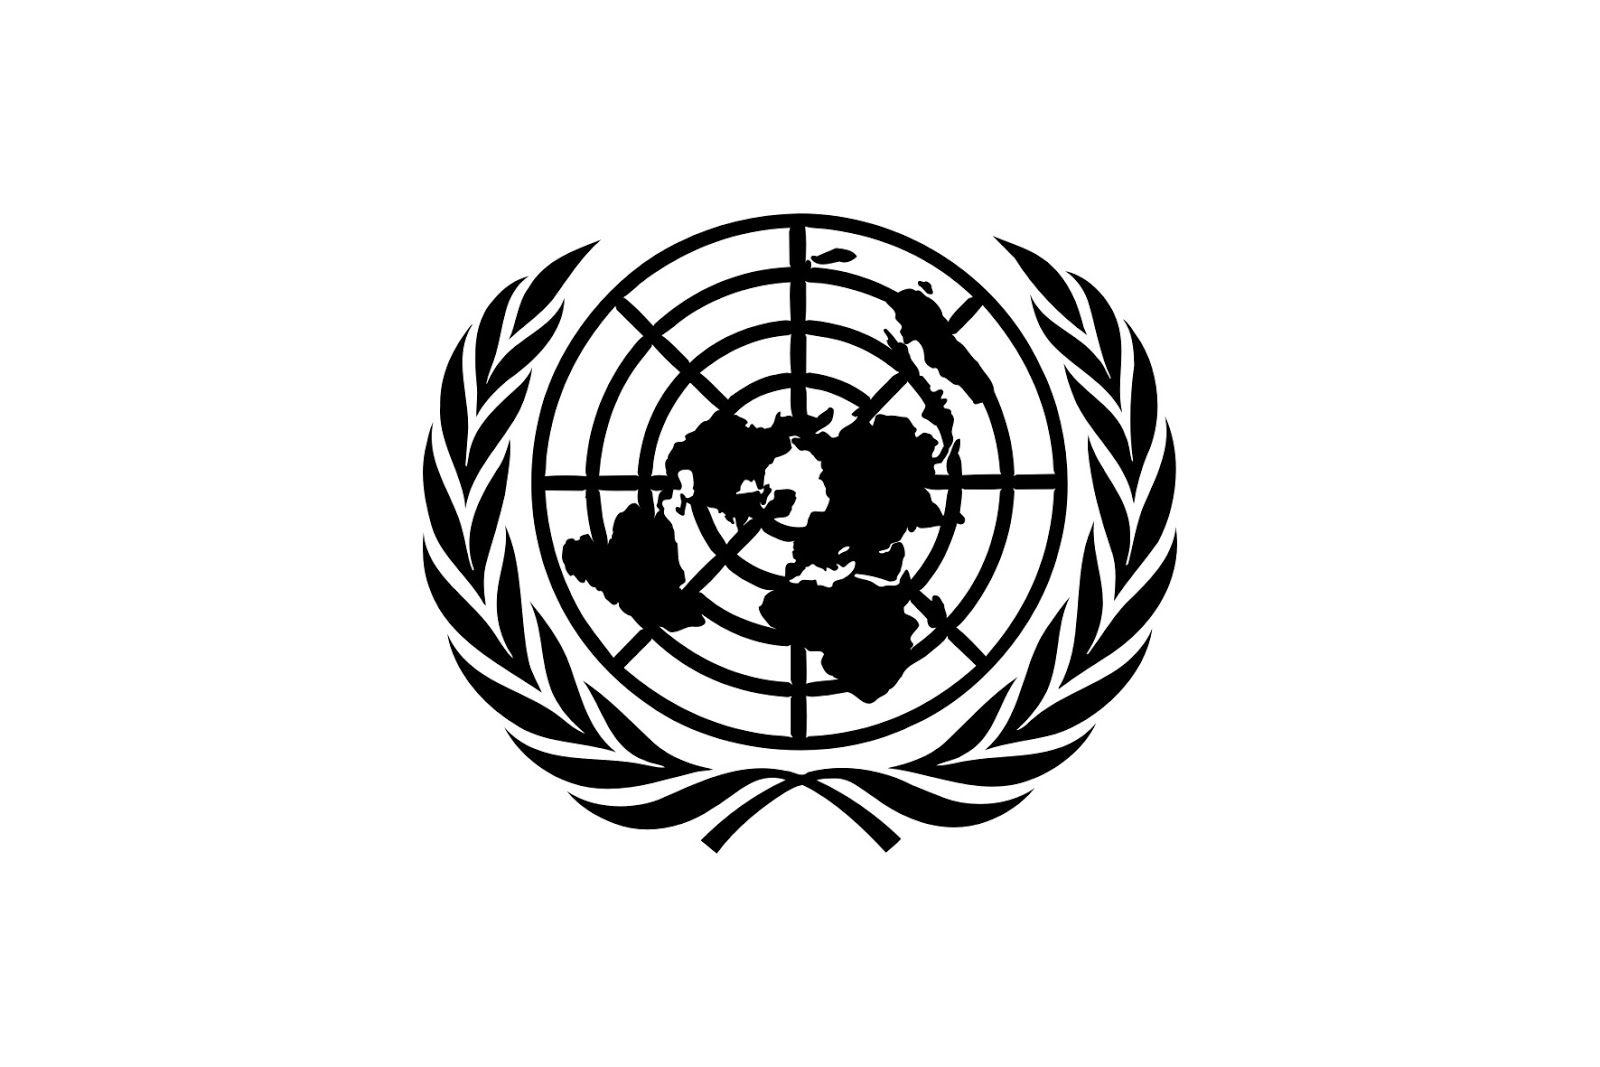 United Nations Logo Map